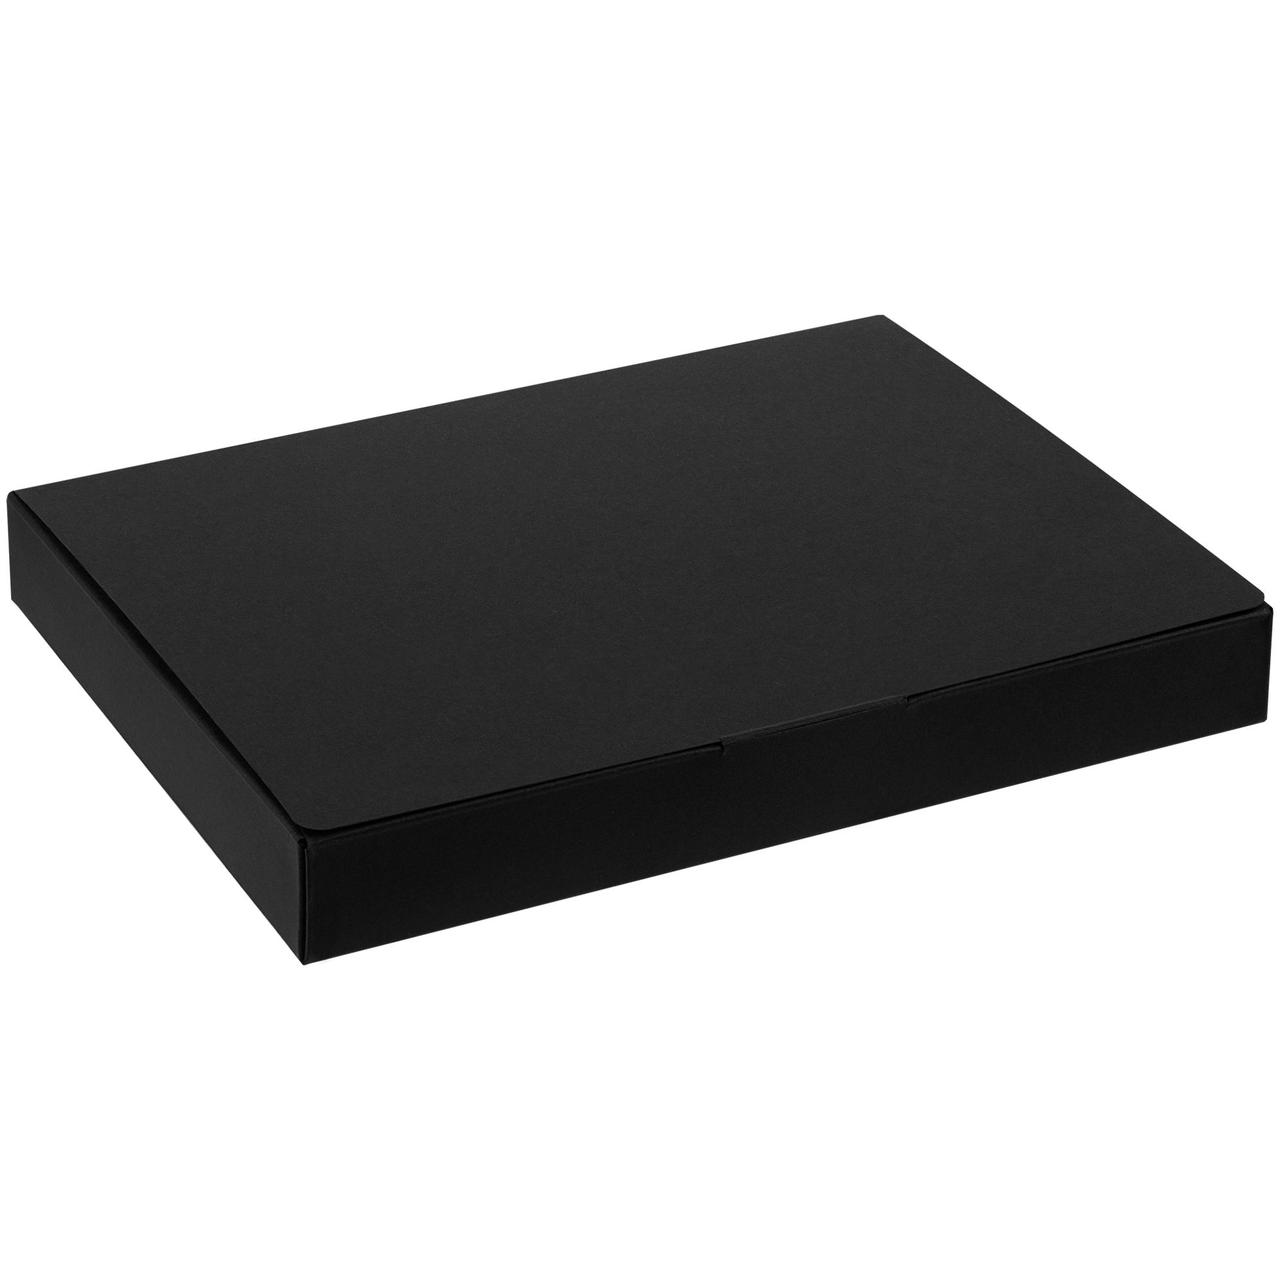 Коробка самосборная Flacky Slim, черная (артикул 12207.30), фото 1